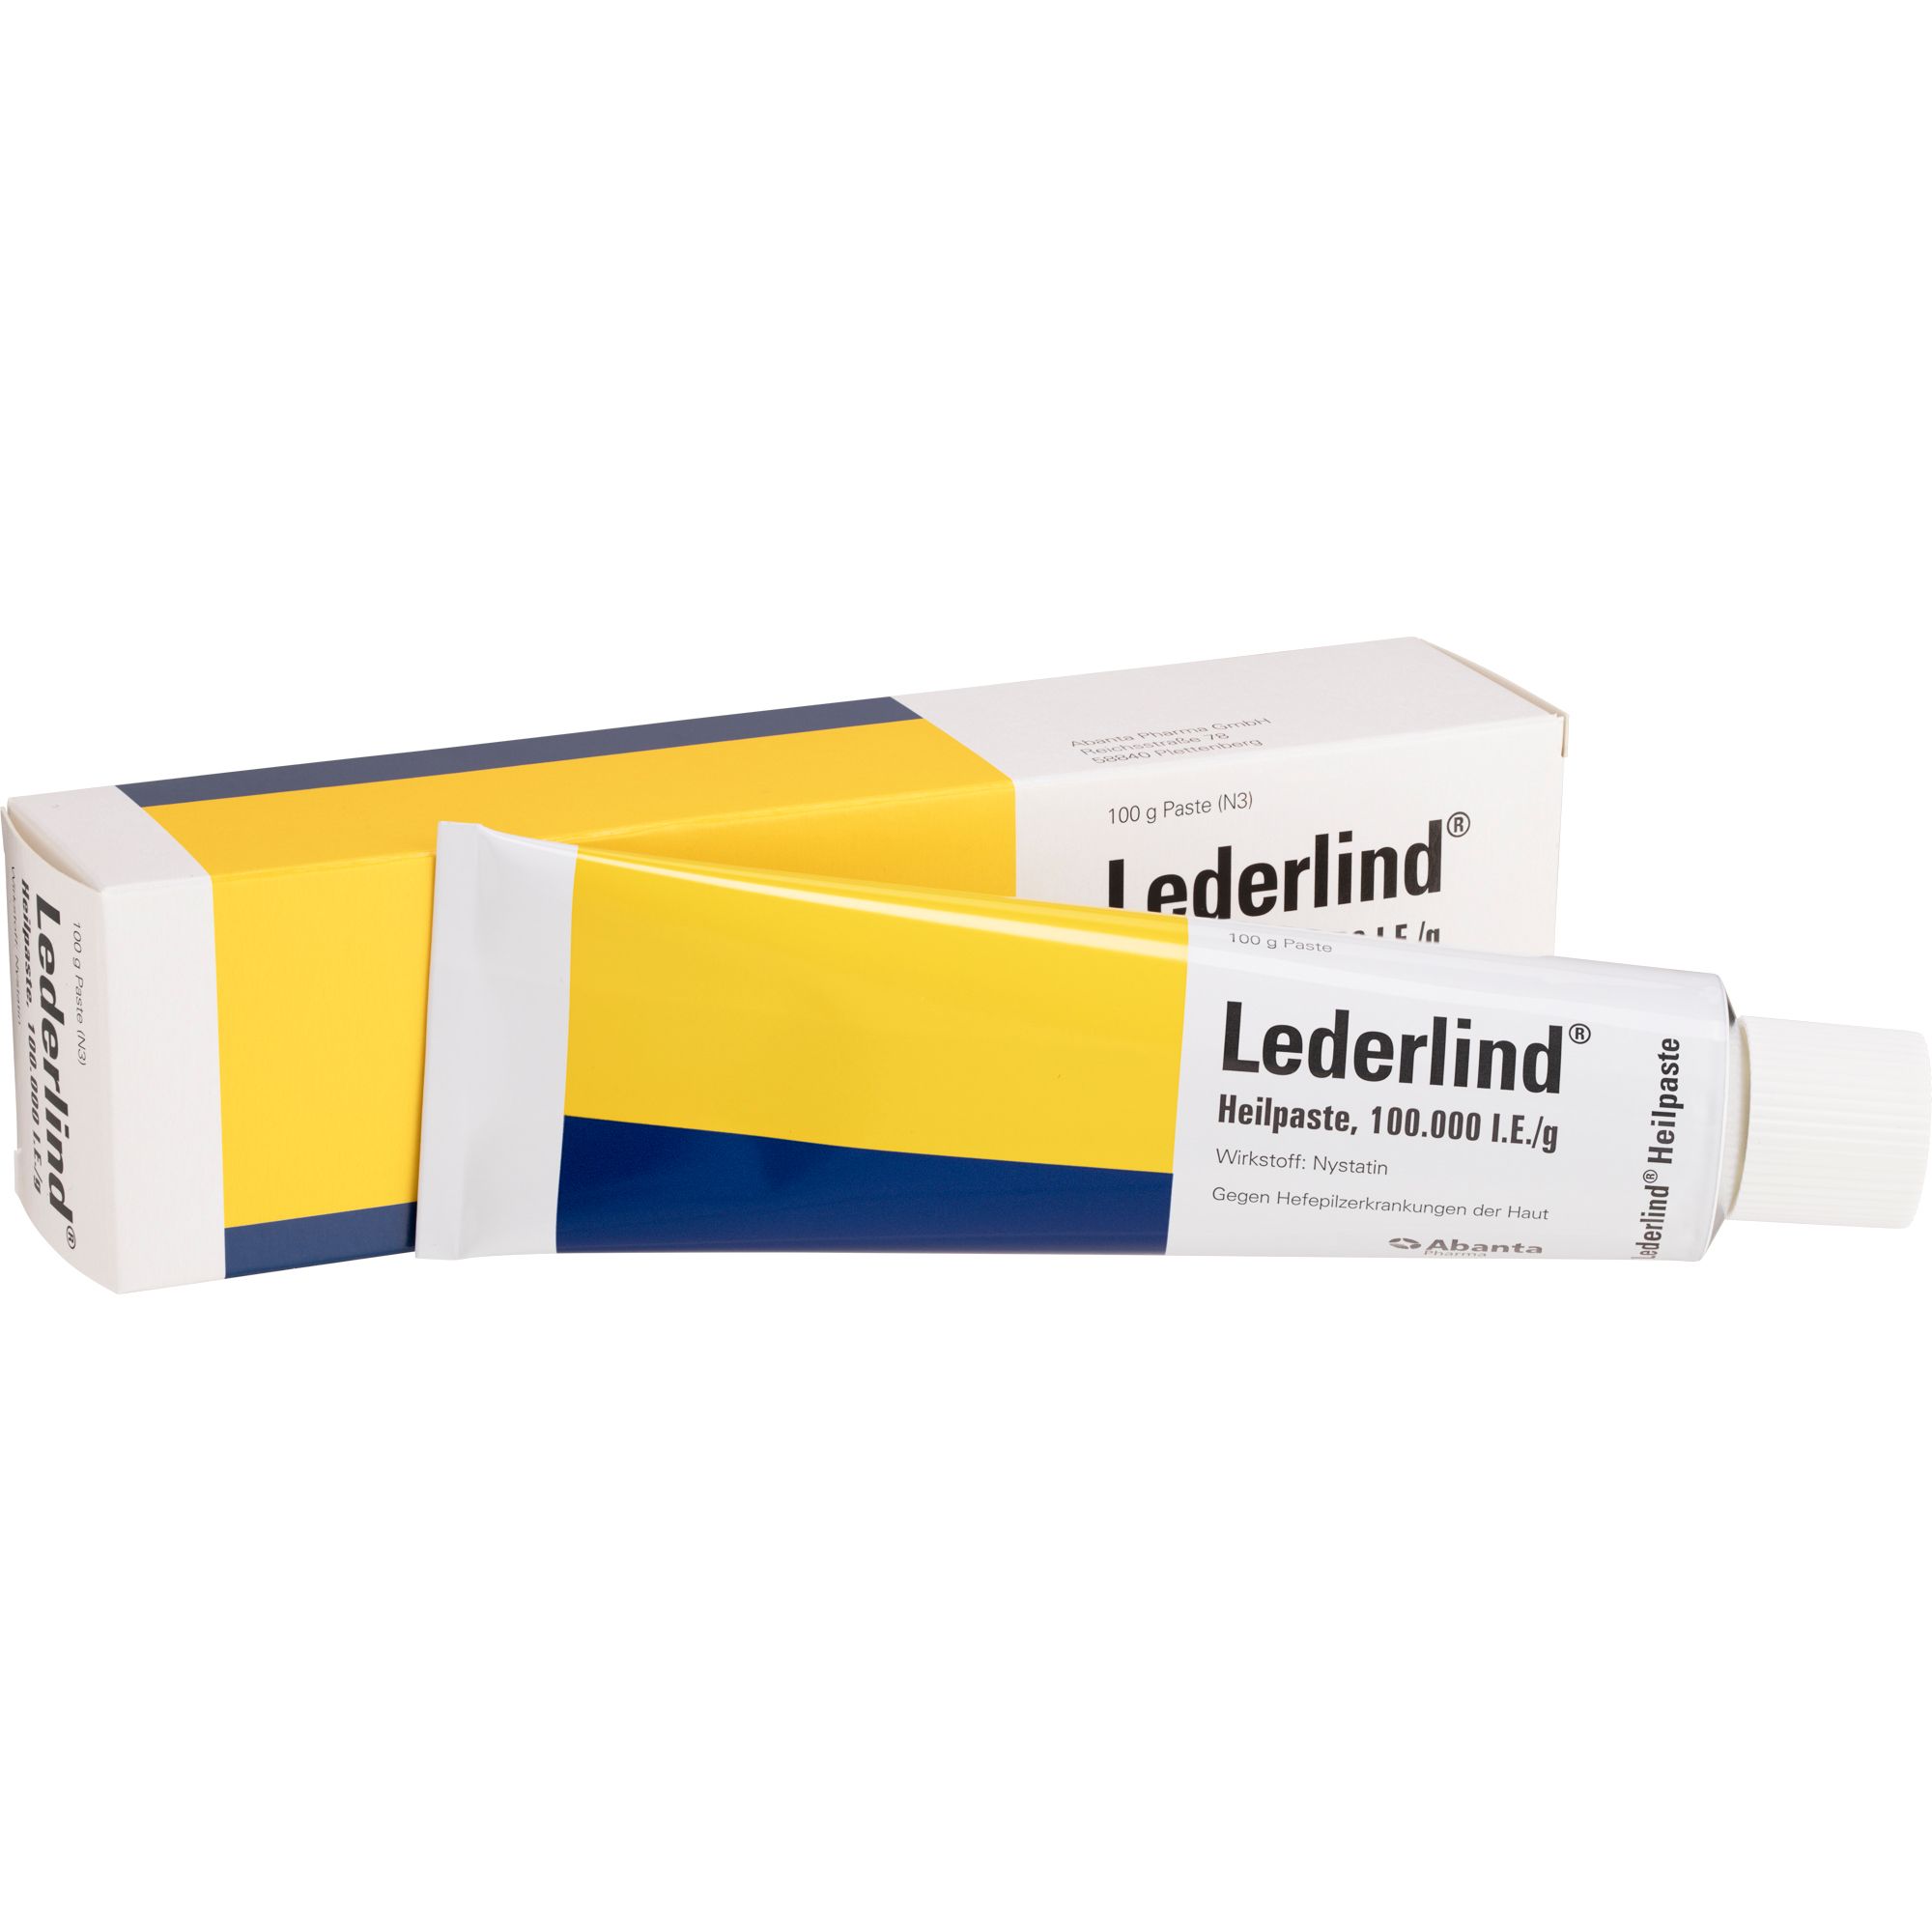 Lederlind® Heilpaste 100.000 I.E./g